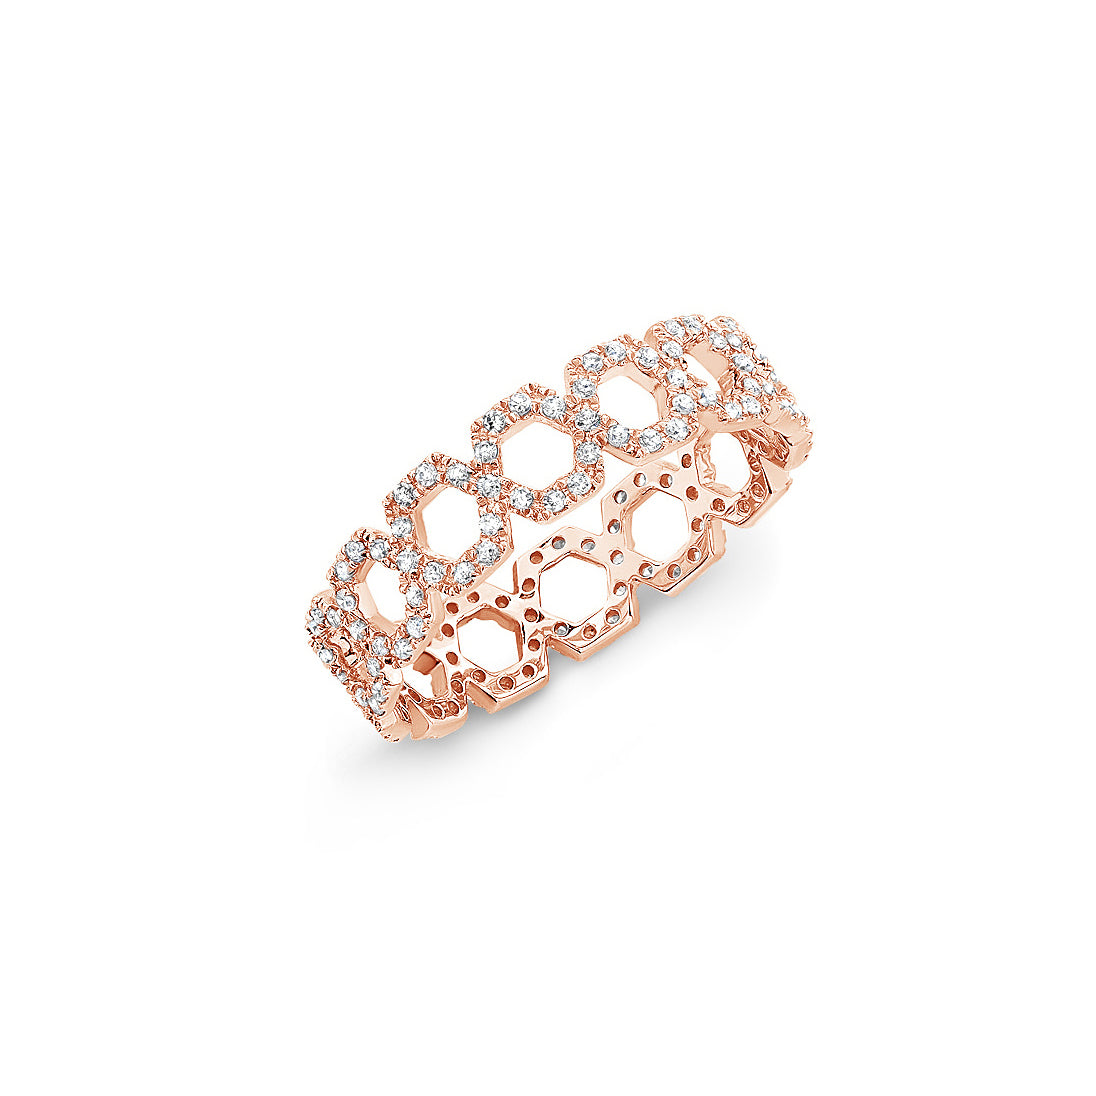 Diamond Hexagonal Chain Eternity Ring  -14k gold weighing 1.72 grams  -126 round diamonds weighing .37 carats